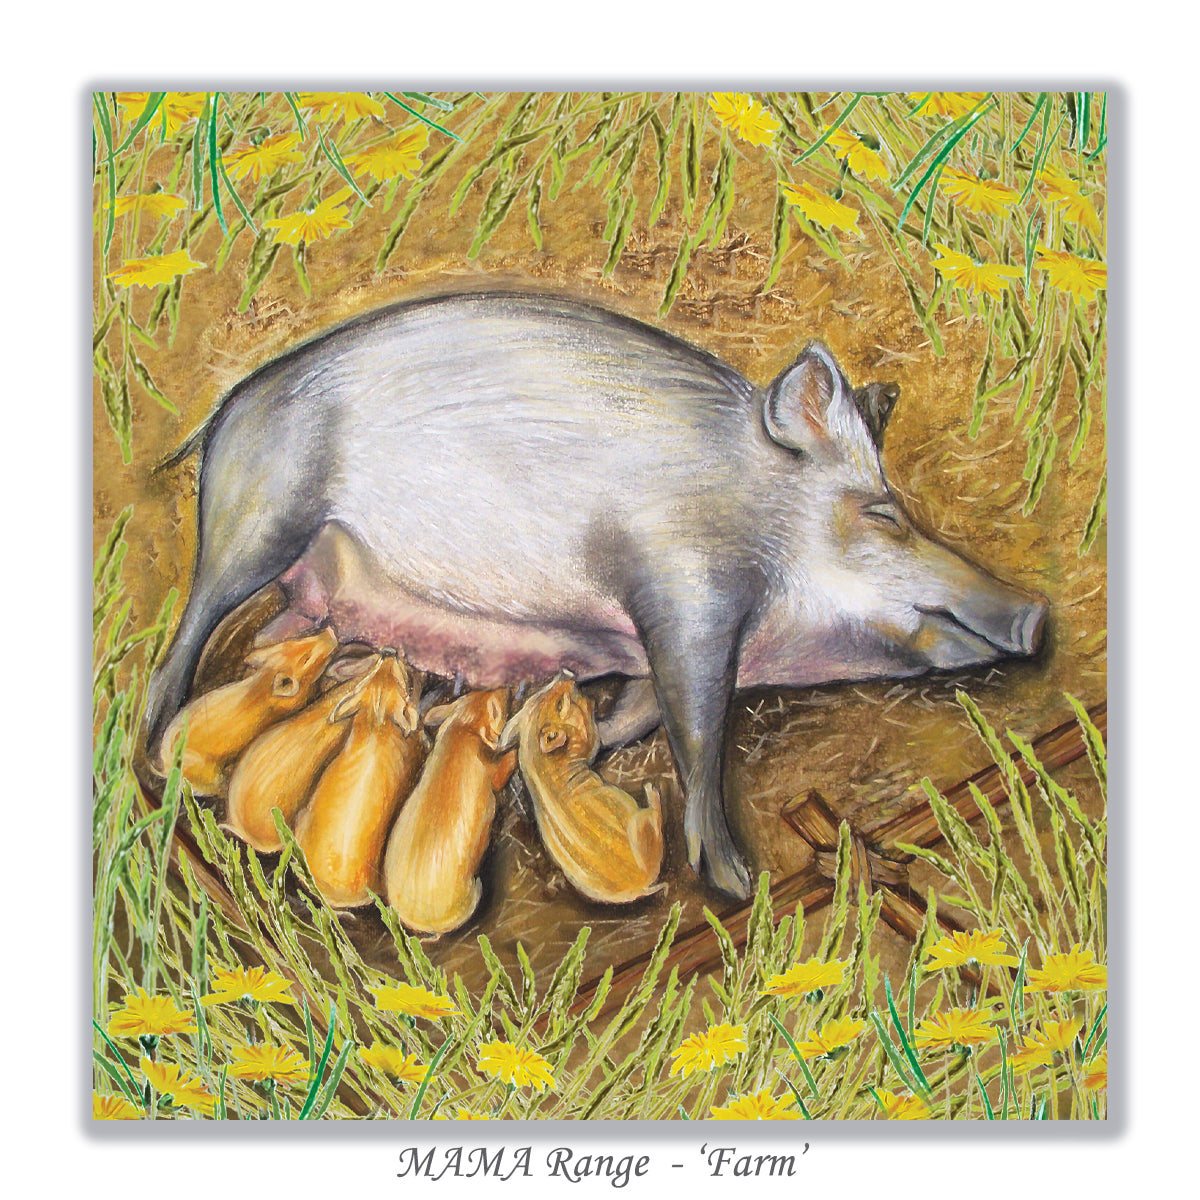 Piglets Nurturing - Farm Life Greeting Card